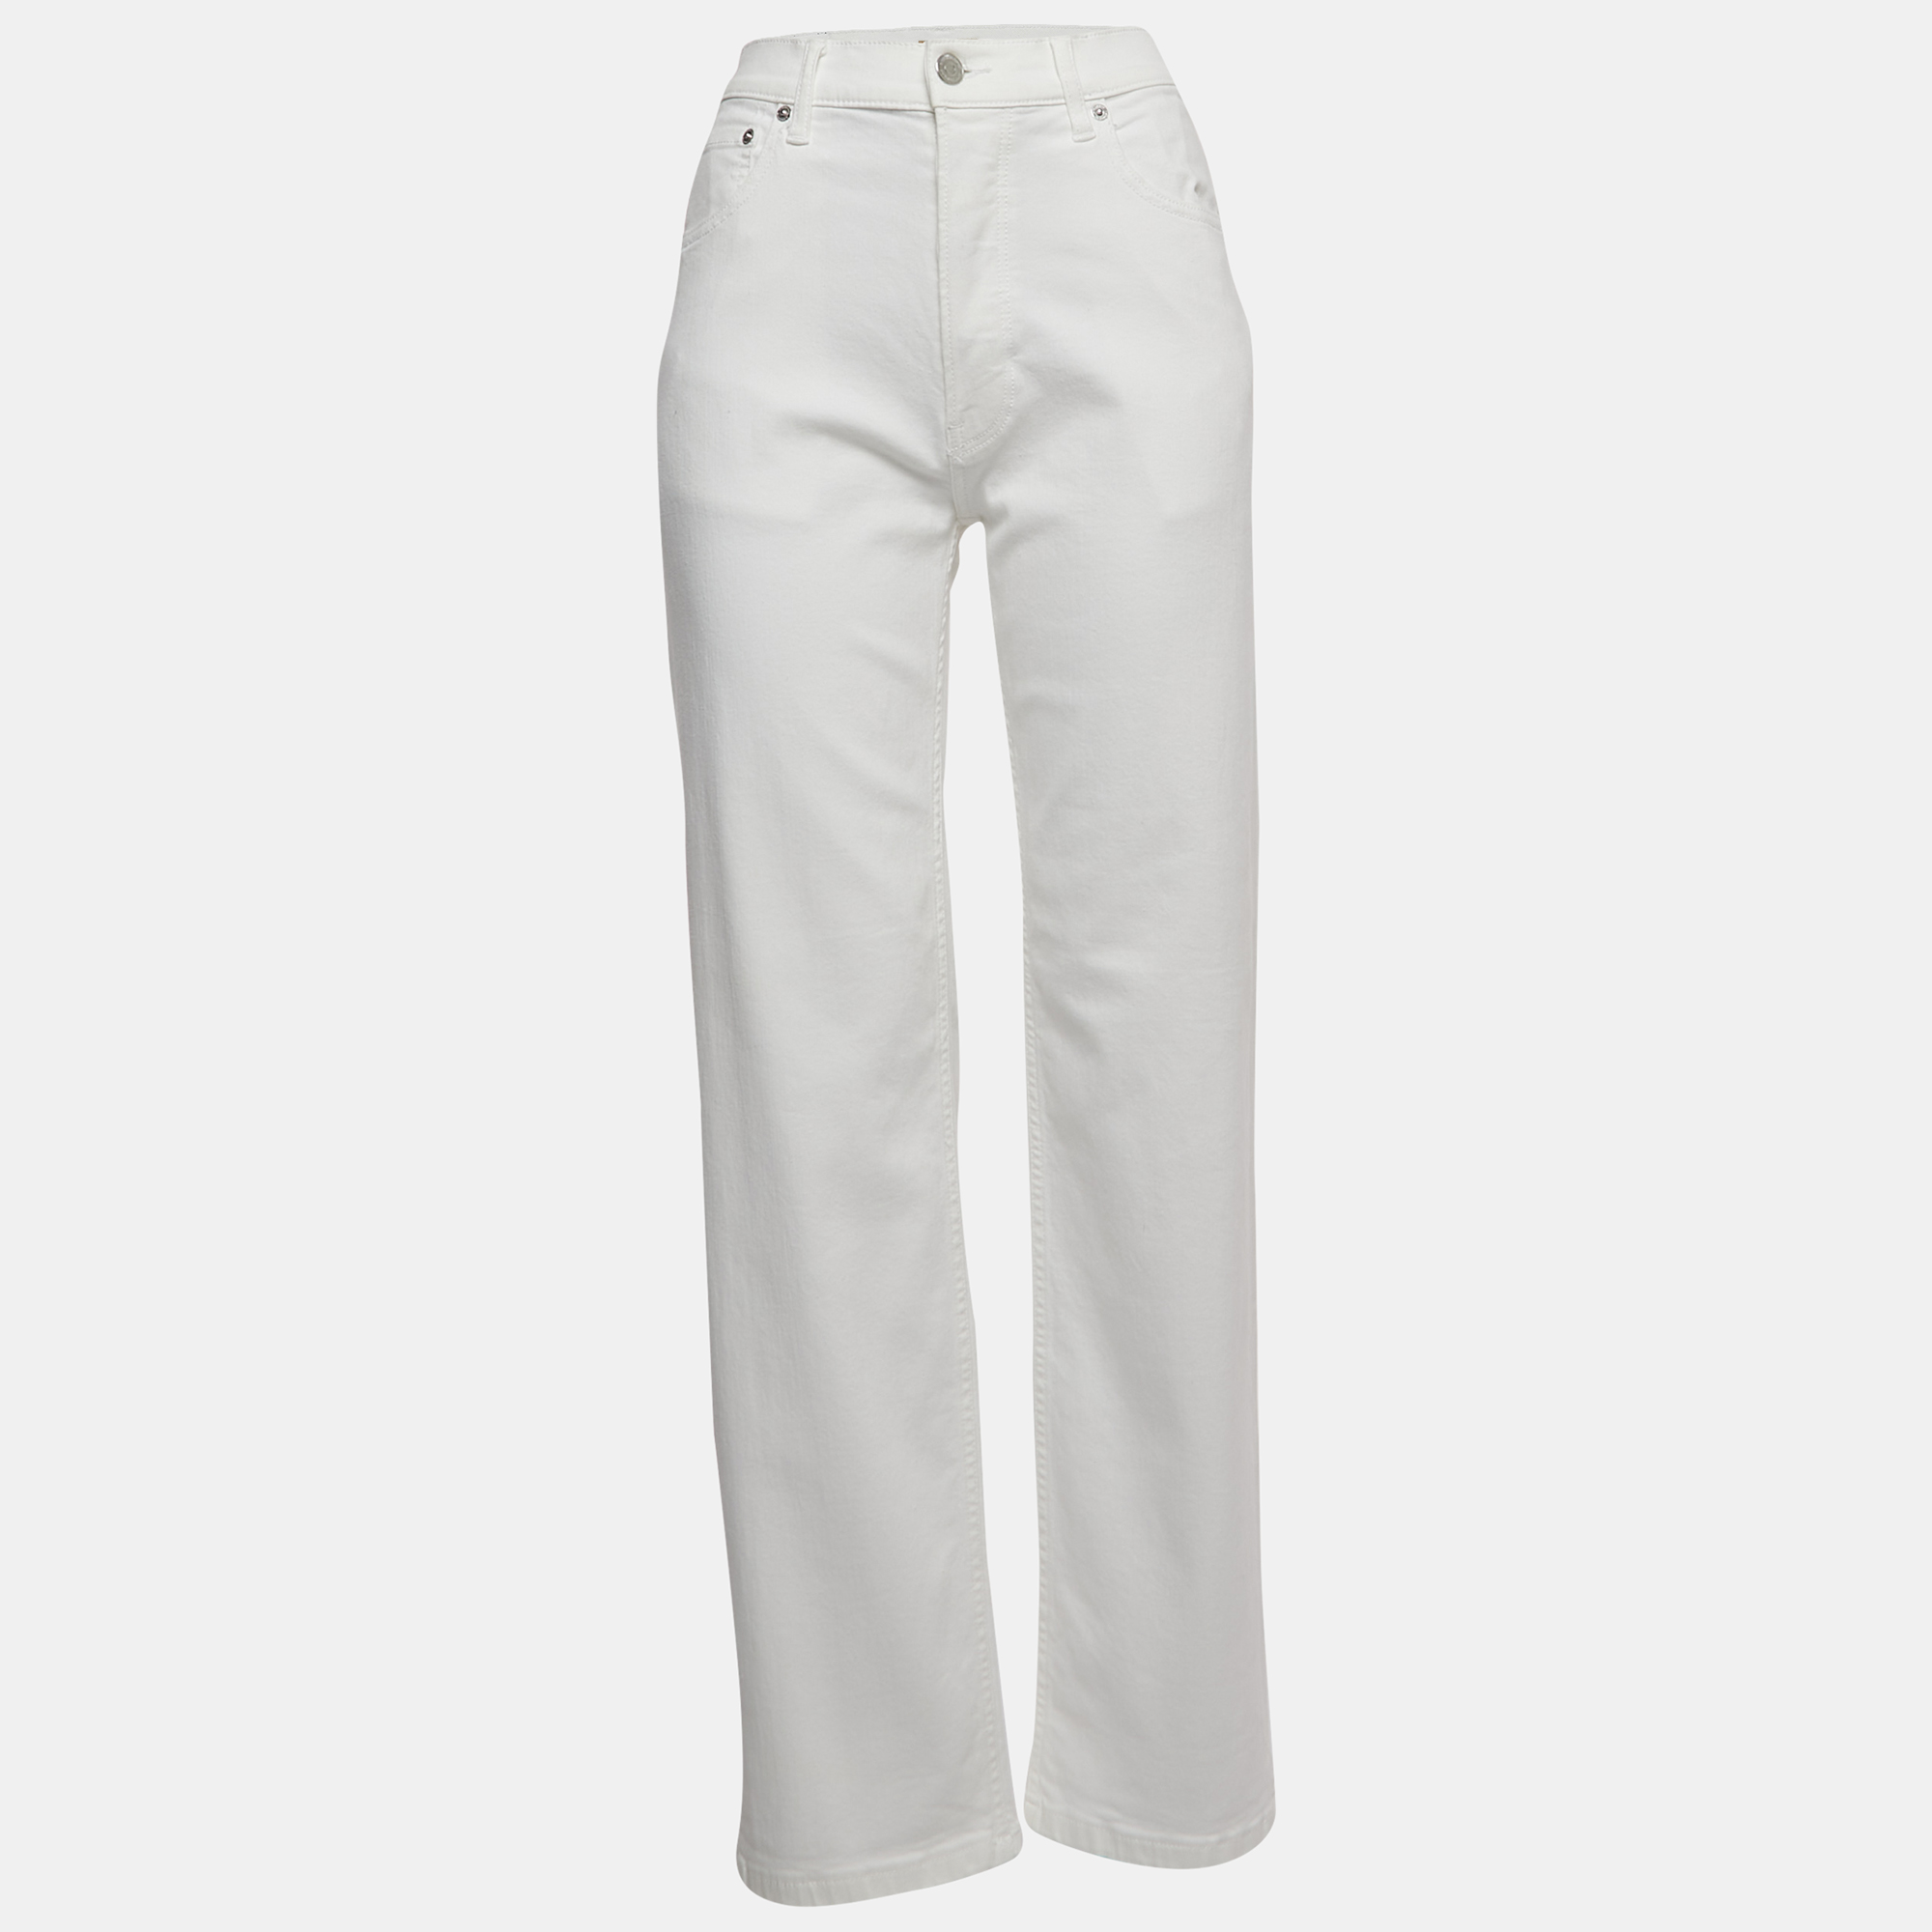 Burberry White Denim Buttoned Jeans M Waist 29